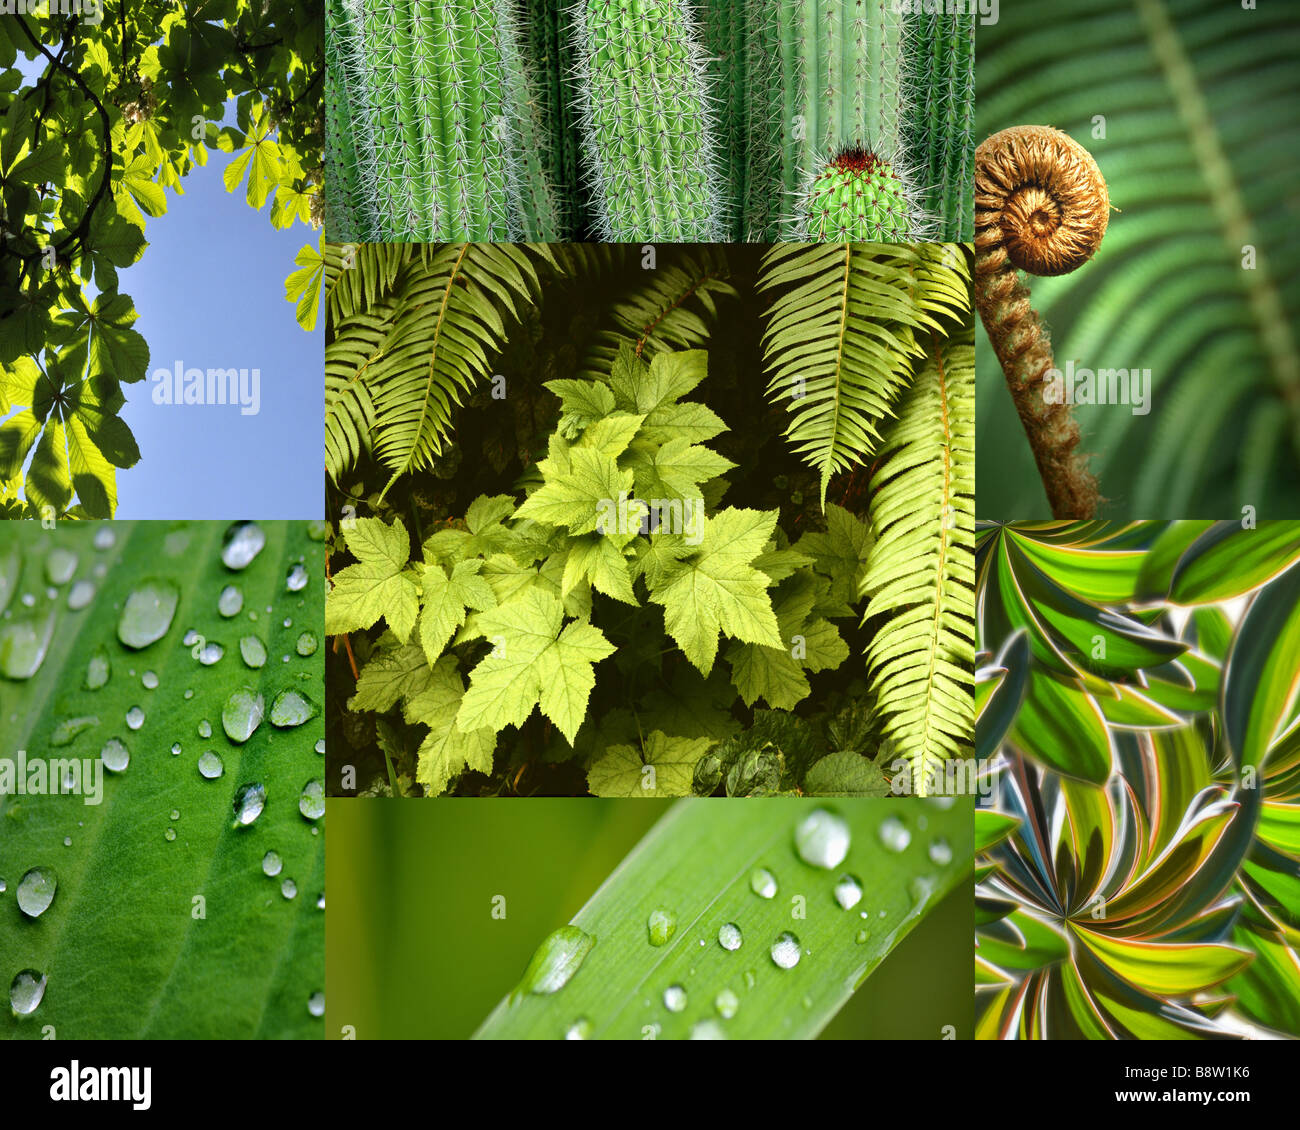 PHOTO ART: The Colour Green (Composite) Stock Photo